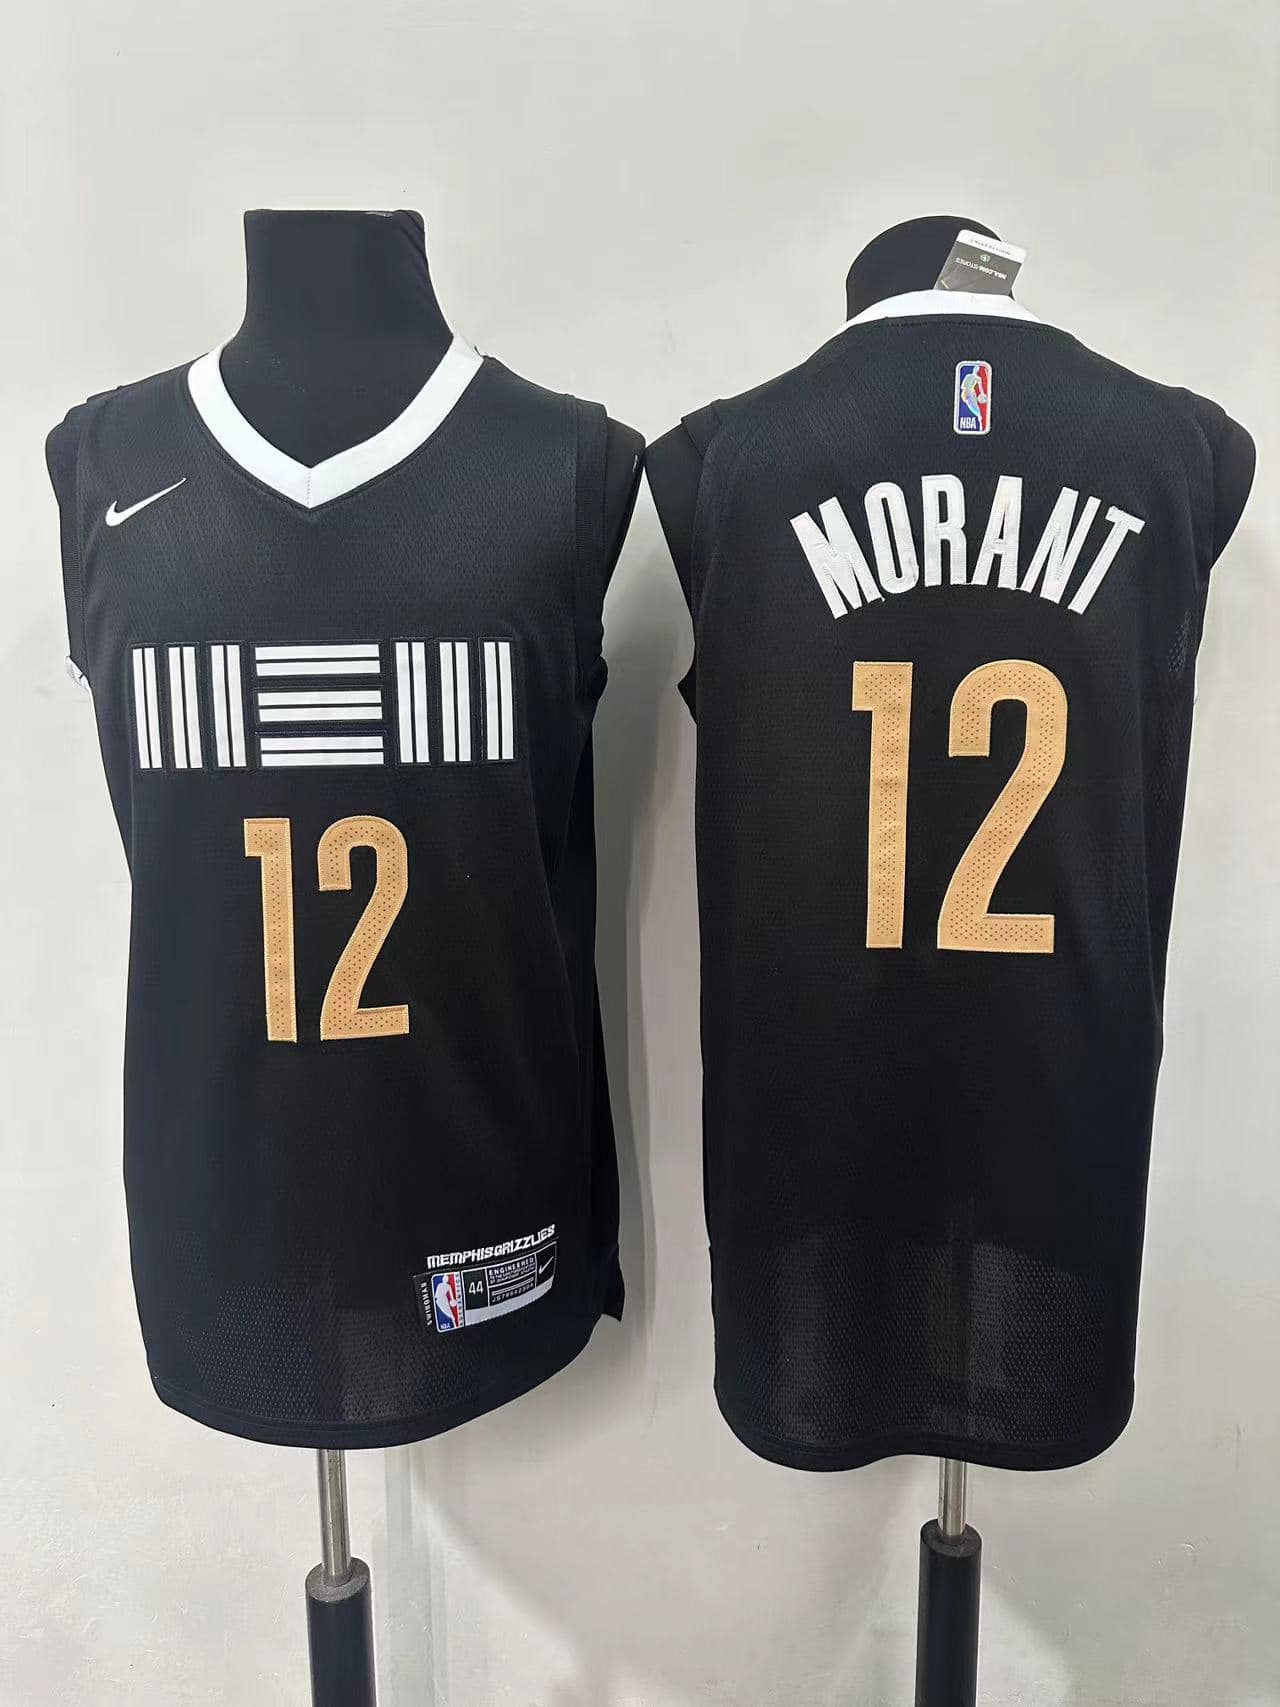 Morant #12 Jersey